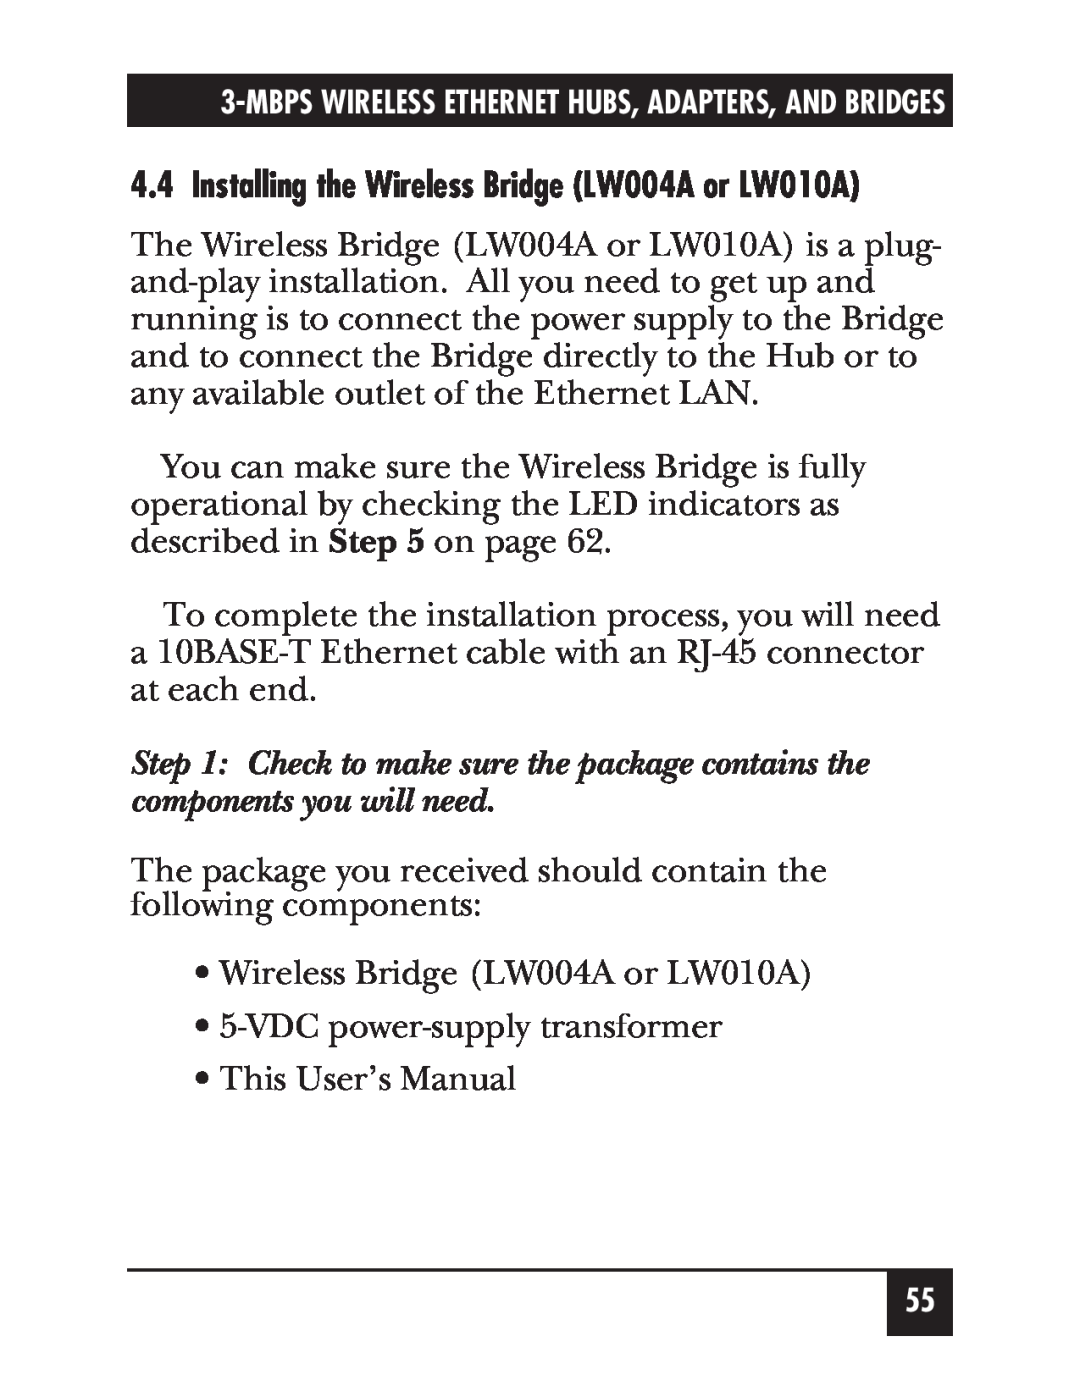 Black Box LW005A, LW012AE, LW011AE, LW008A, LW009A, LW003A, LW002A, LW007A Installing the Wireless Bridge LW004A or LW010A 